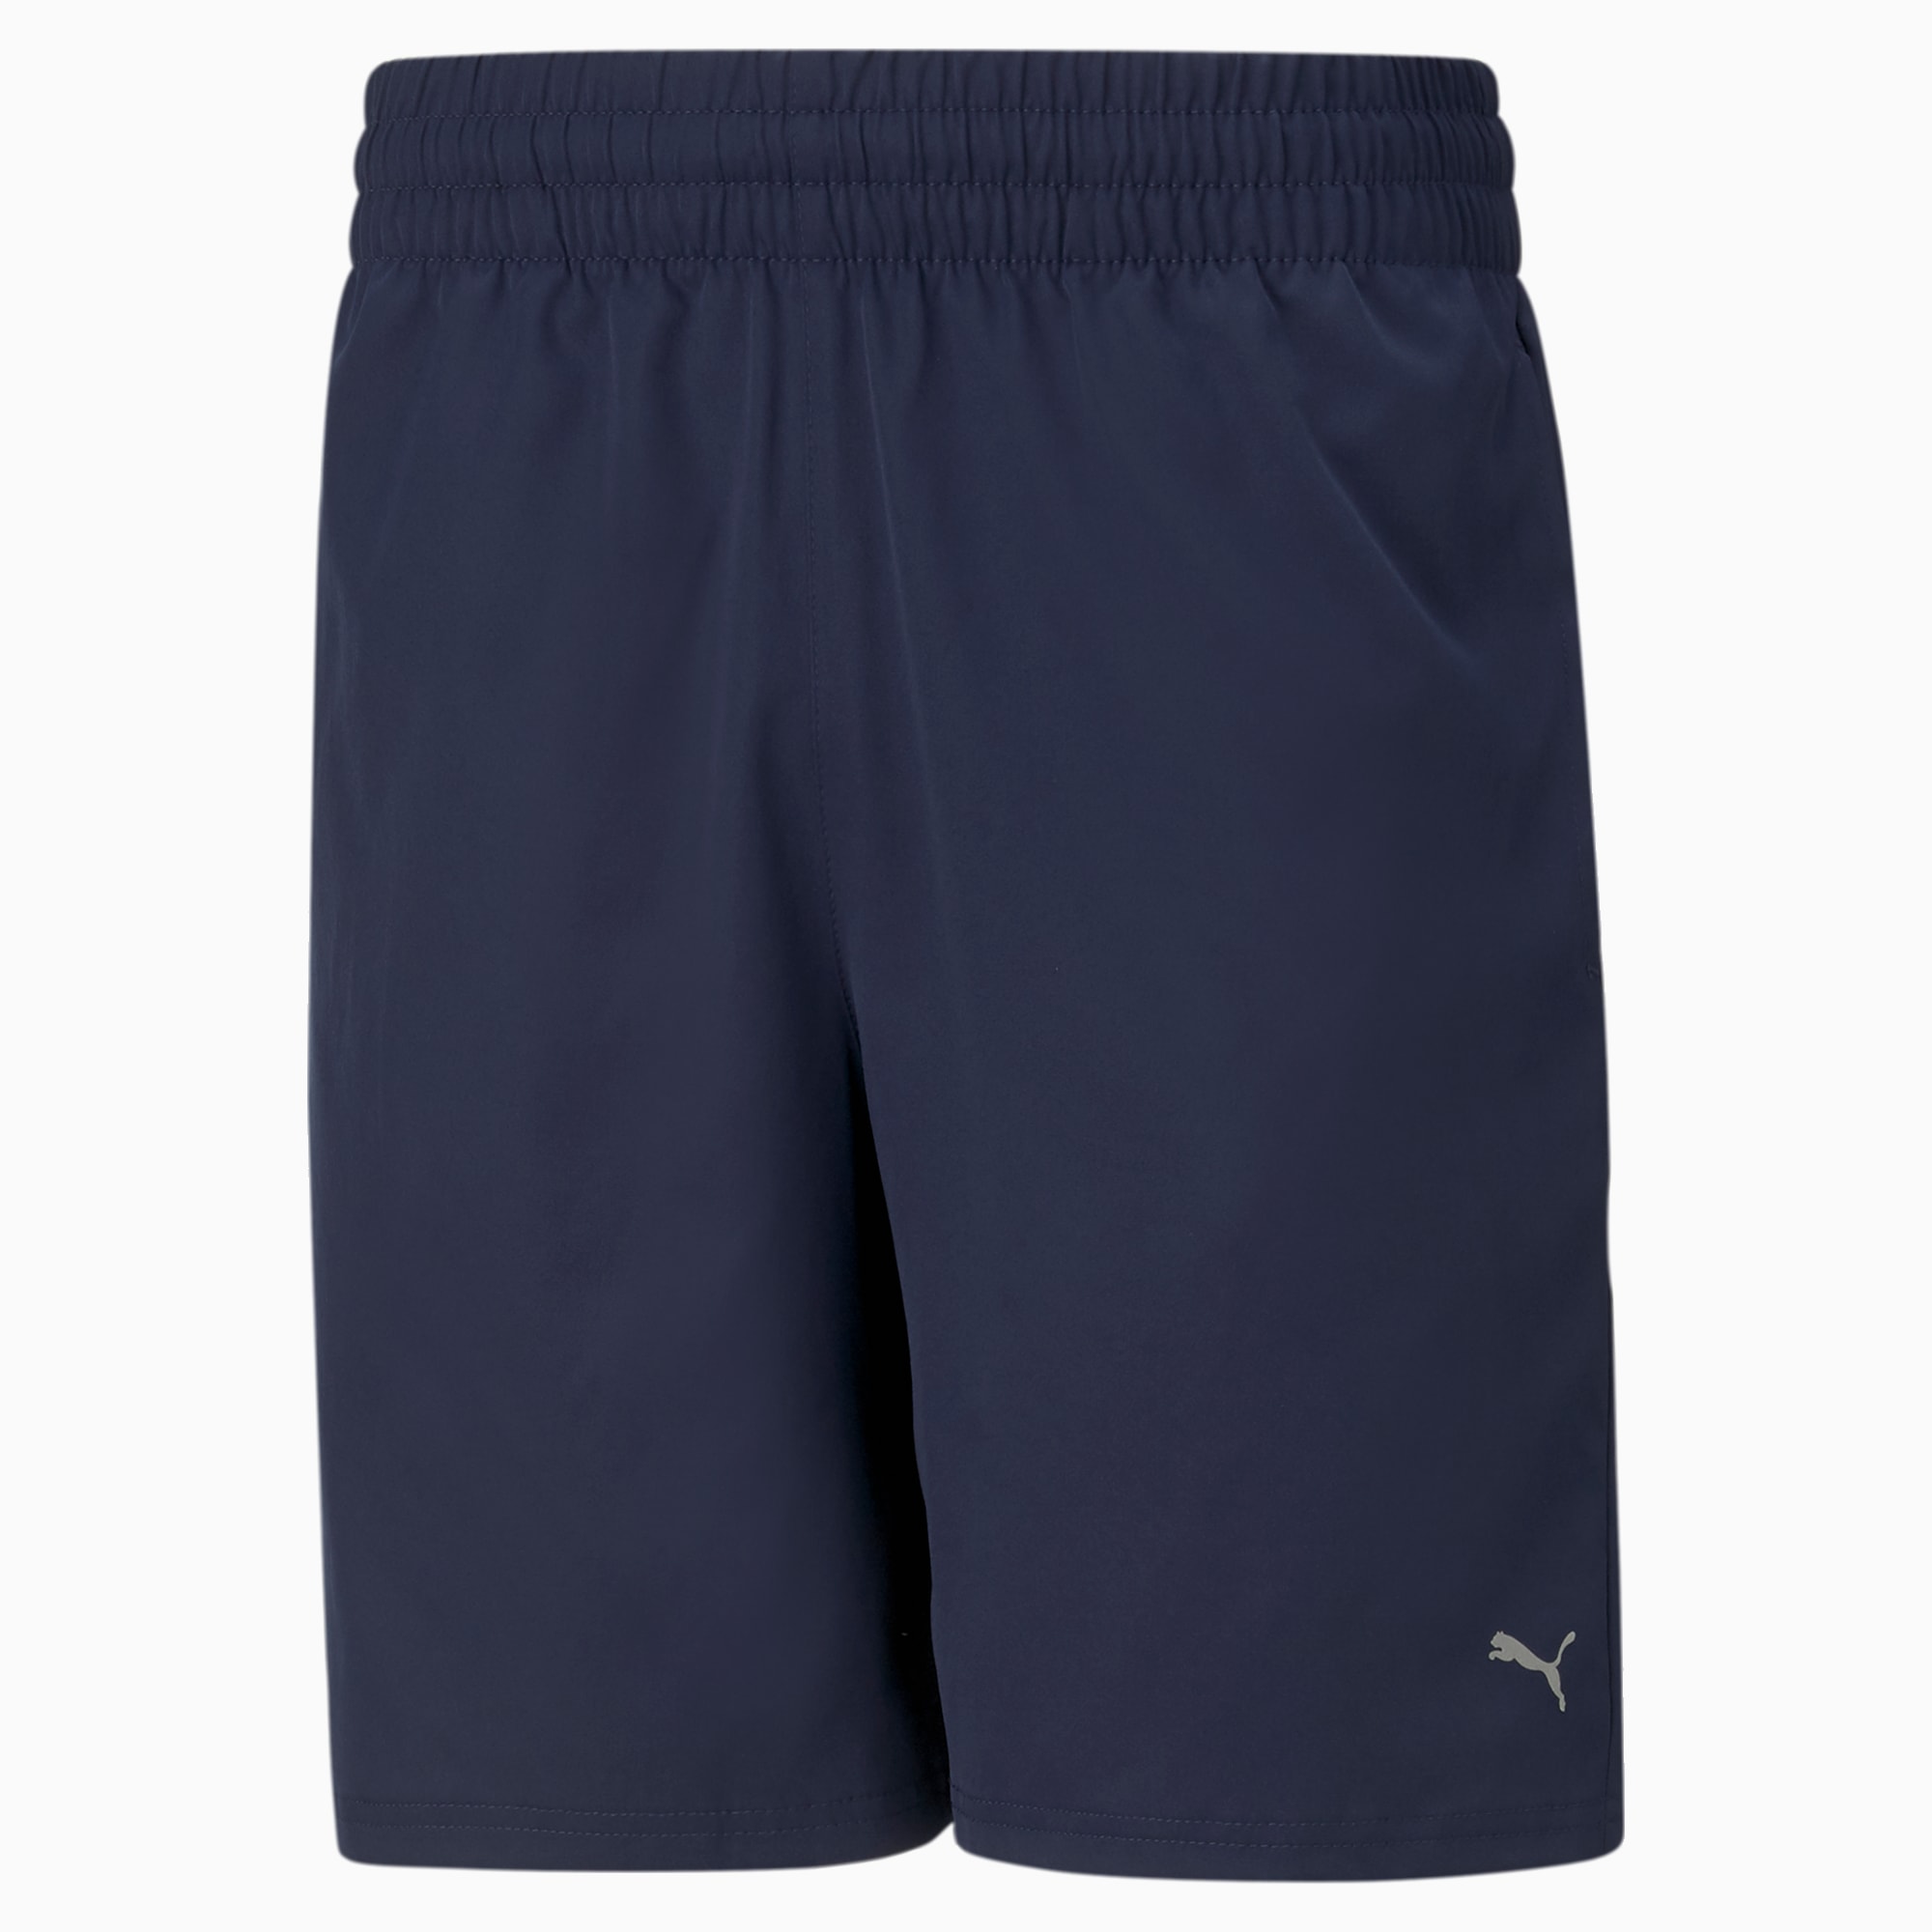 PUMA Performance Woven 7” Men's Training Shorts, Peacoat, Size XL, Clothing